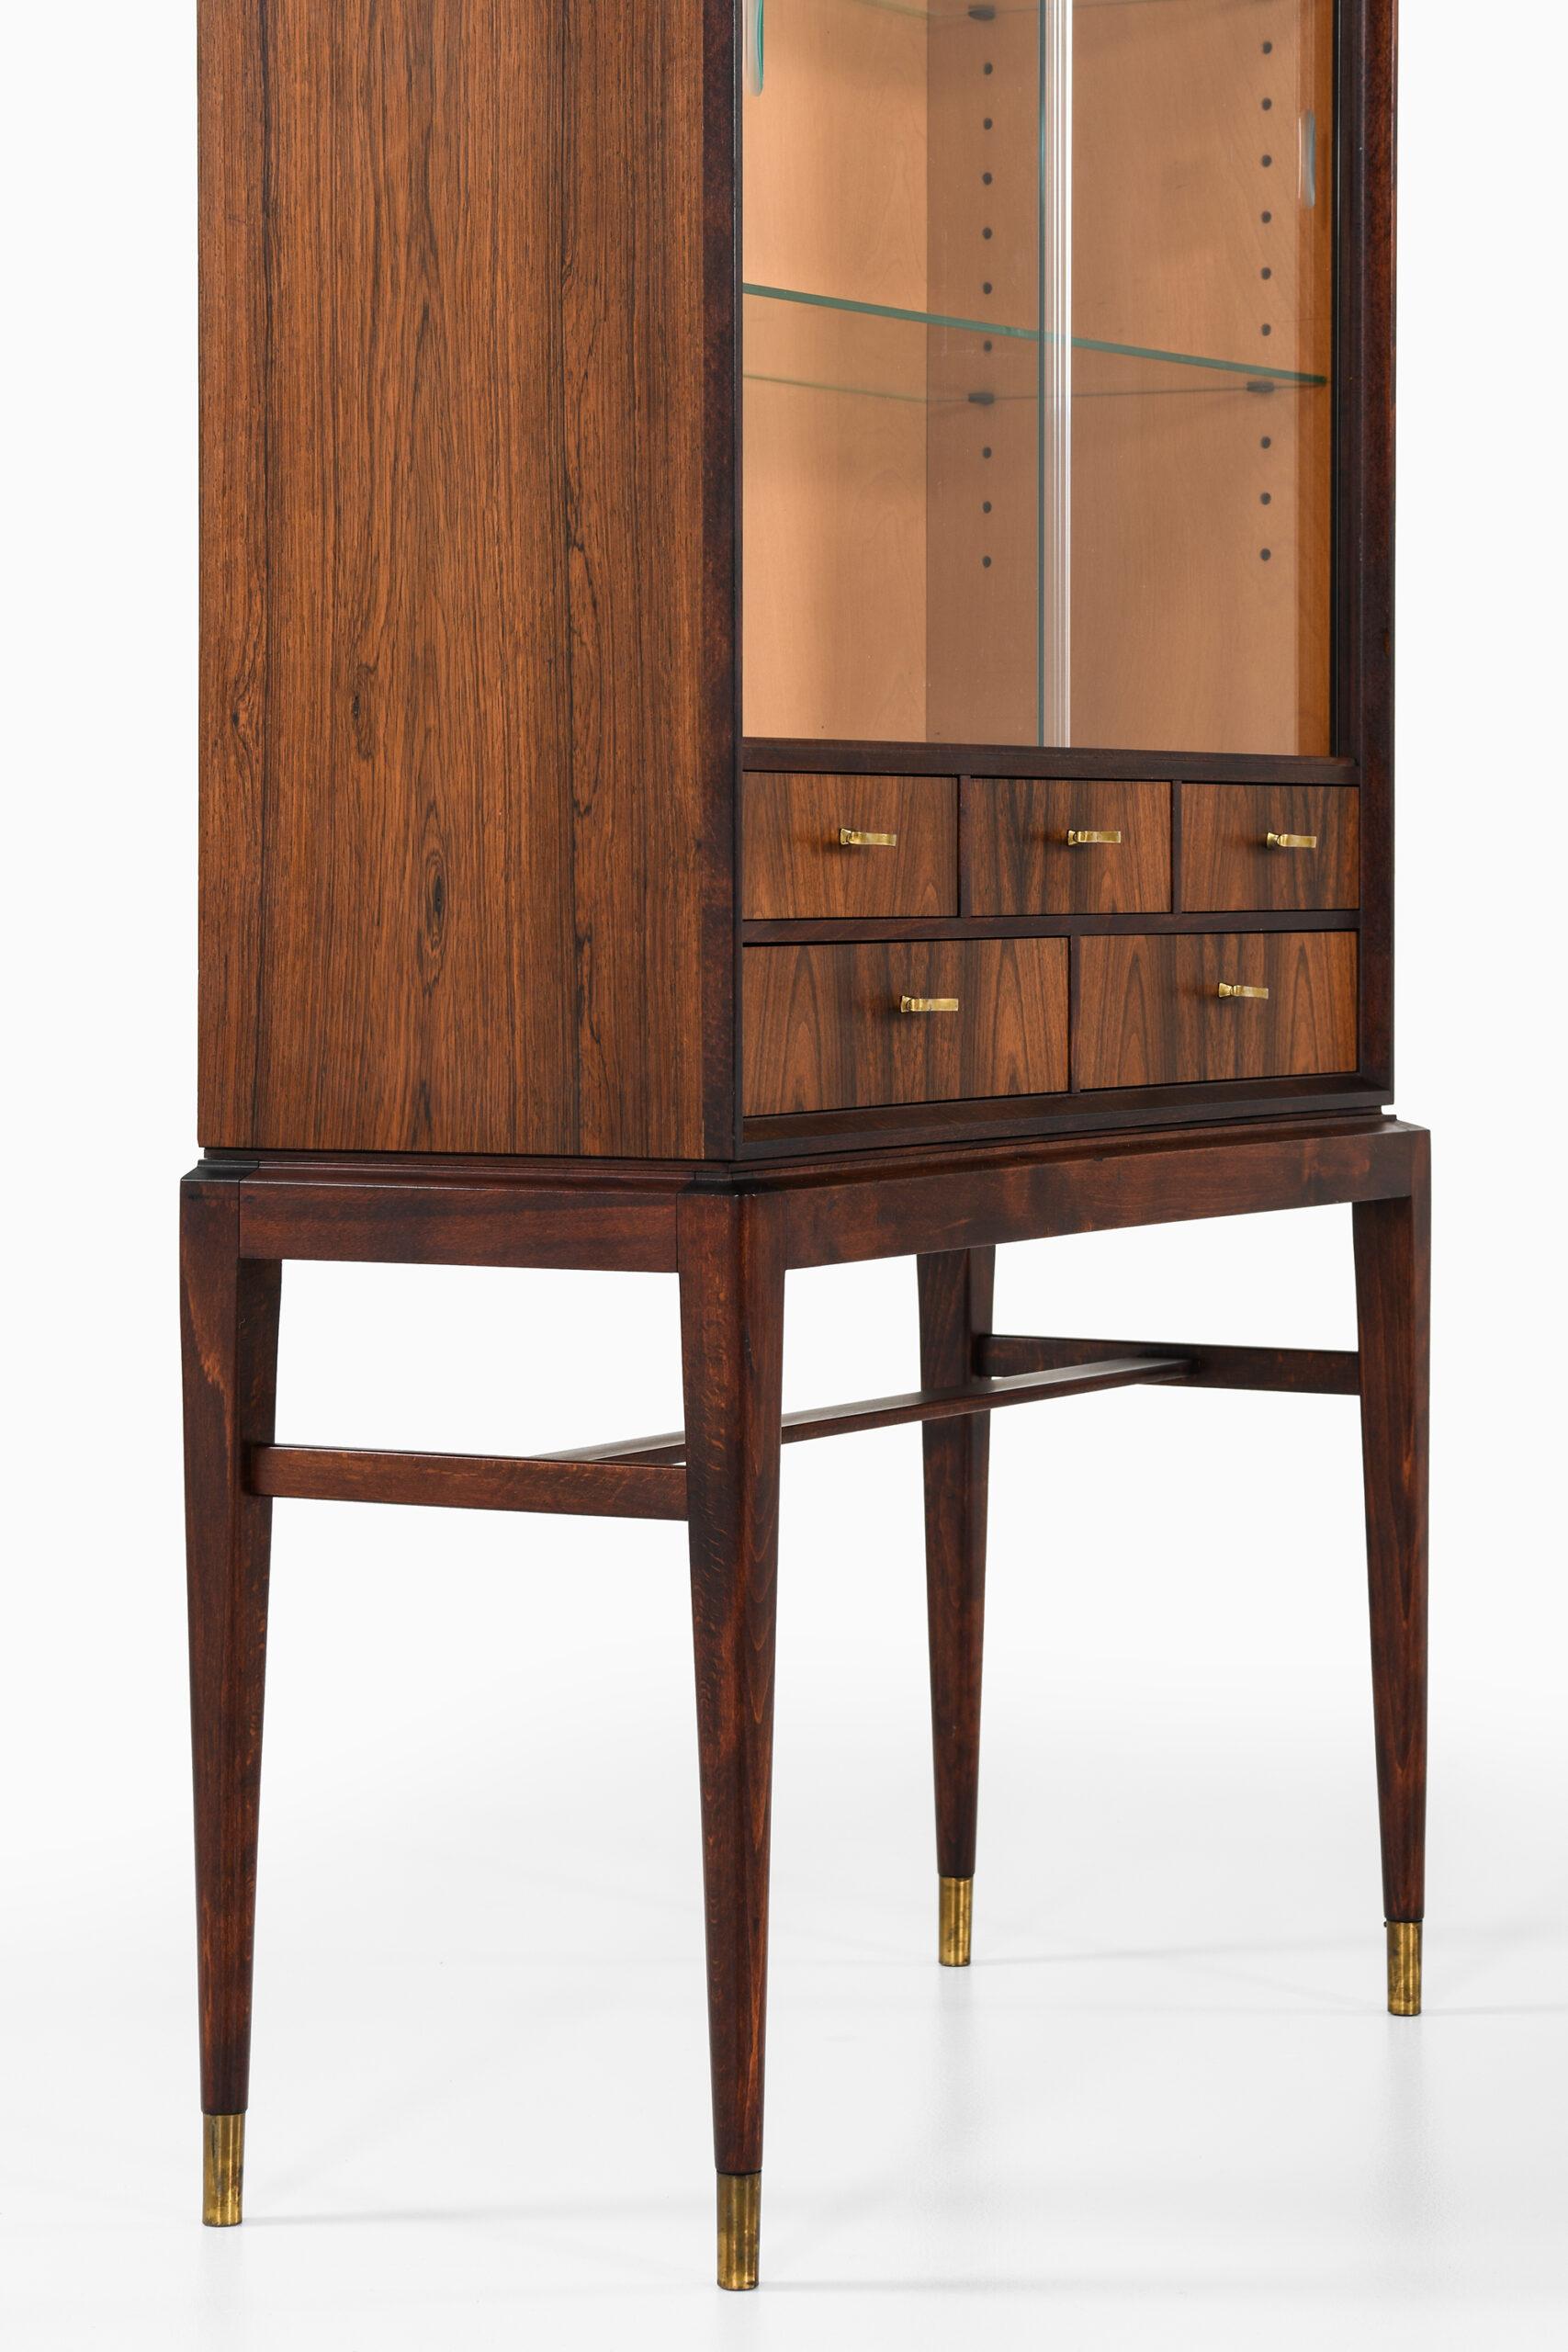 Rare cabinet designed by Svante Skogh. Produced by Seffle Möbelfabrik in Sweden.